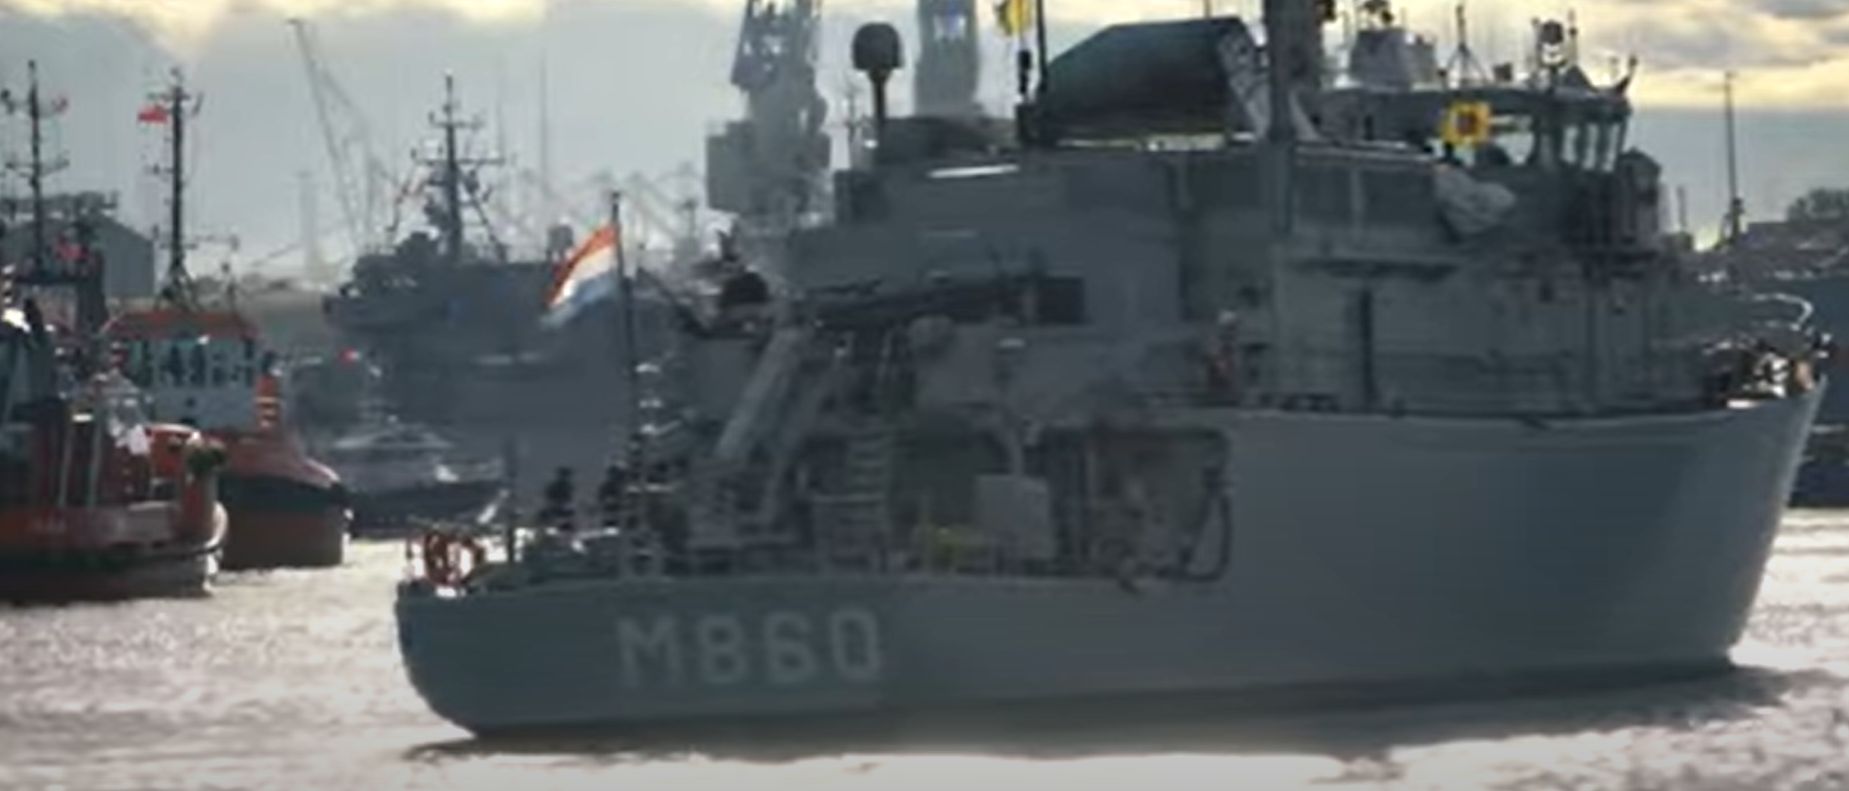 NATO ships at the Port of Gdansk - MarinePoland.com